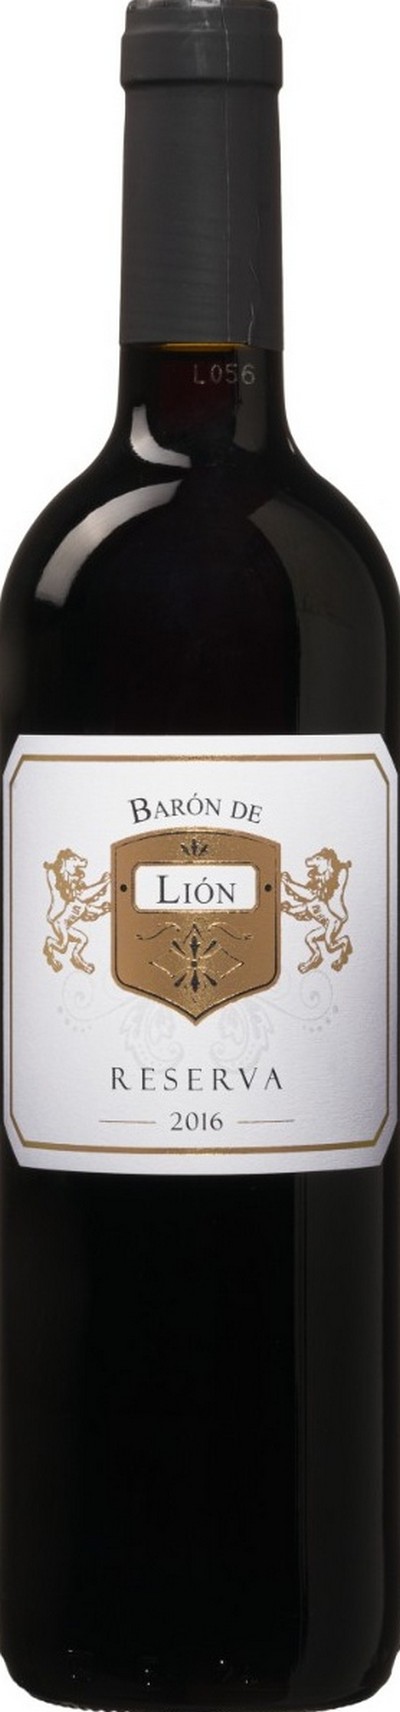 baron-de-lion-reserva-2016